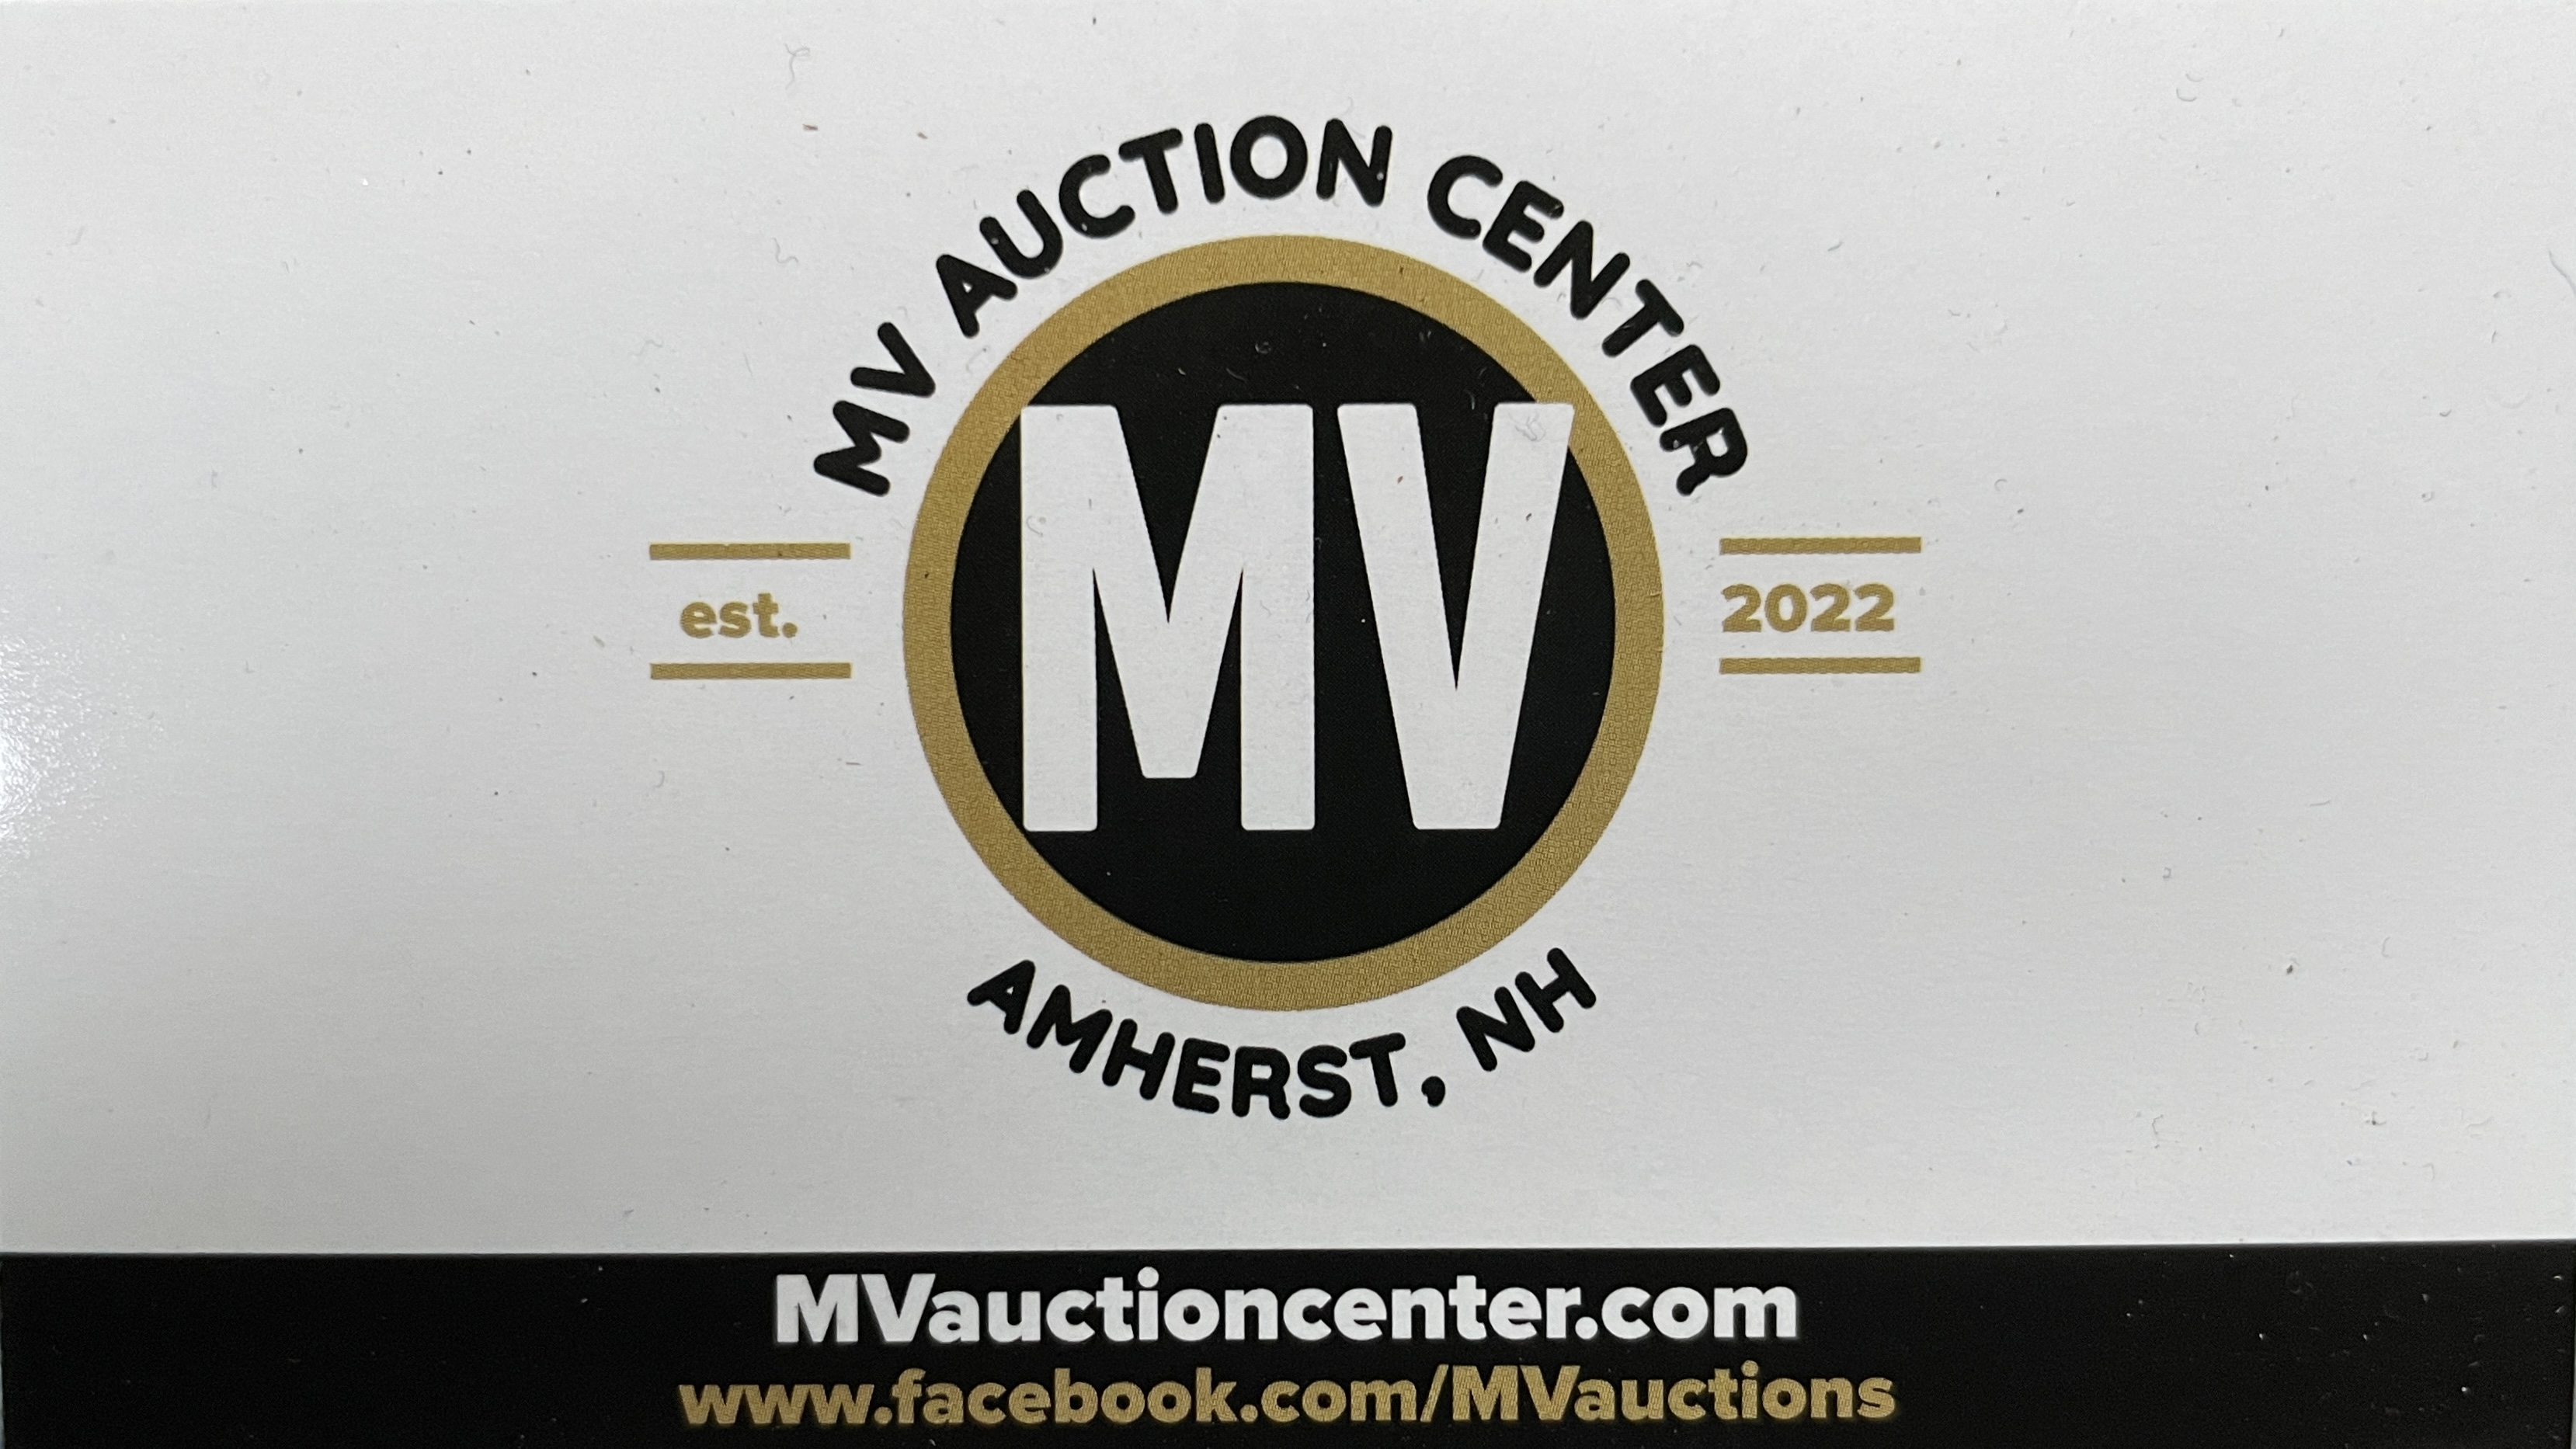 MV Auction Center | AuctionNinja